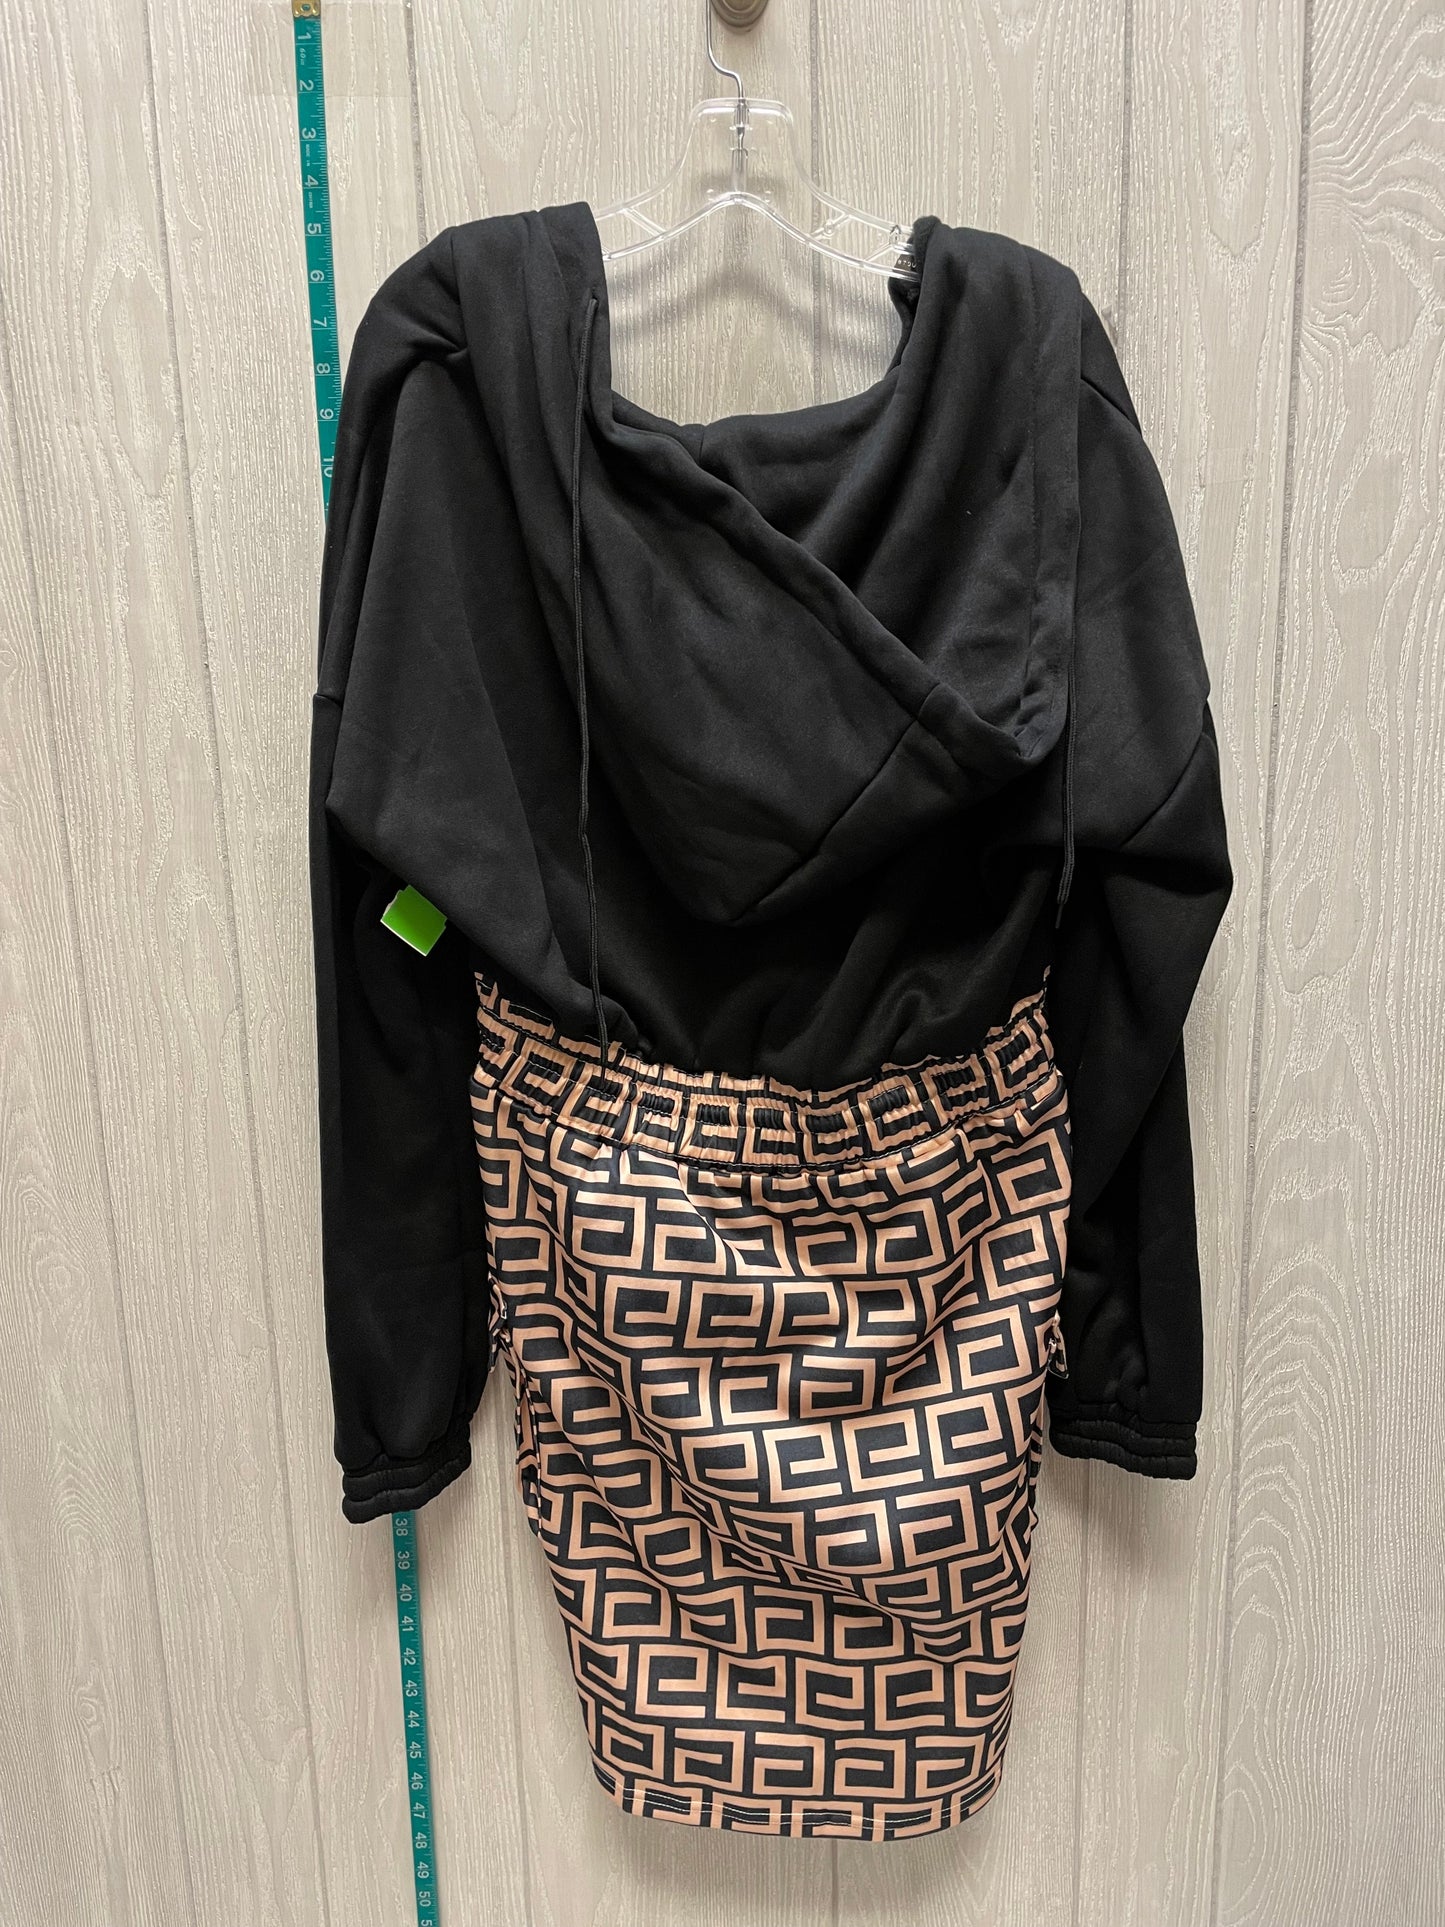 Black & Tan Dress Casual Short Shein, Size 1x